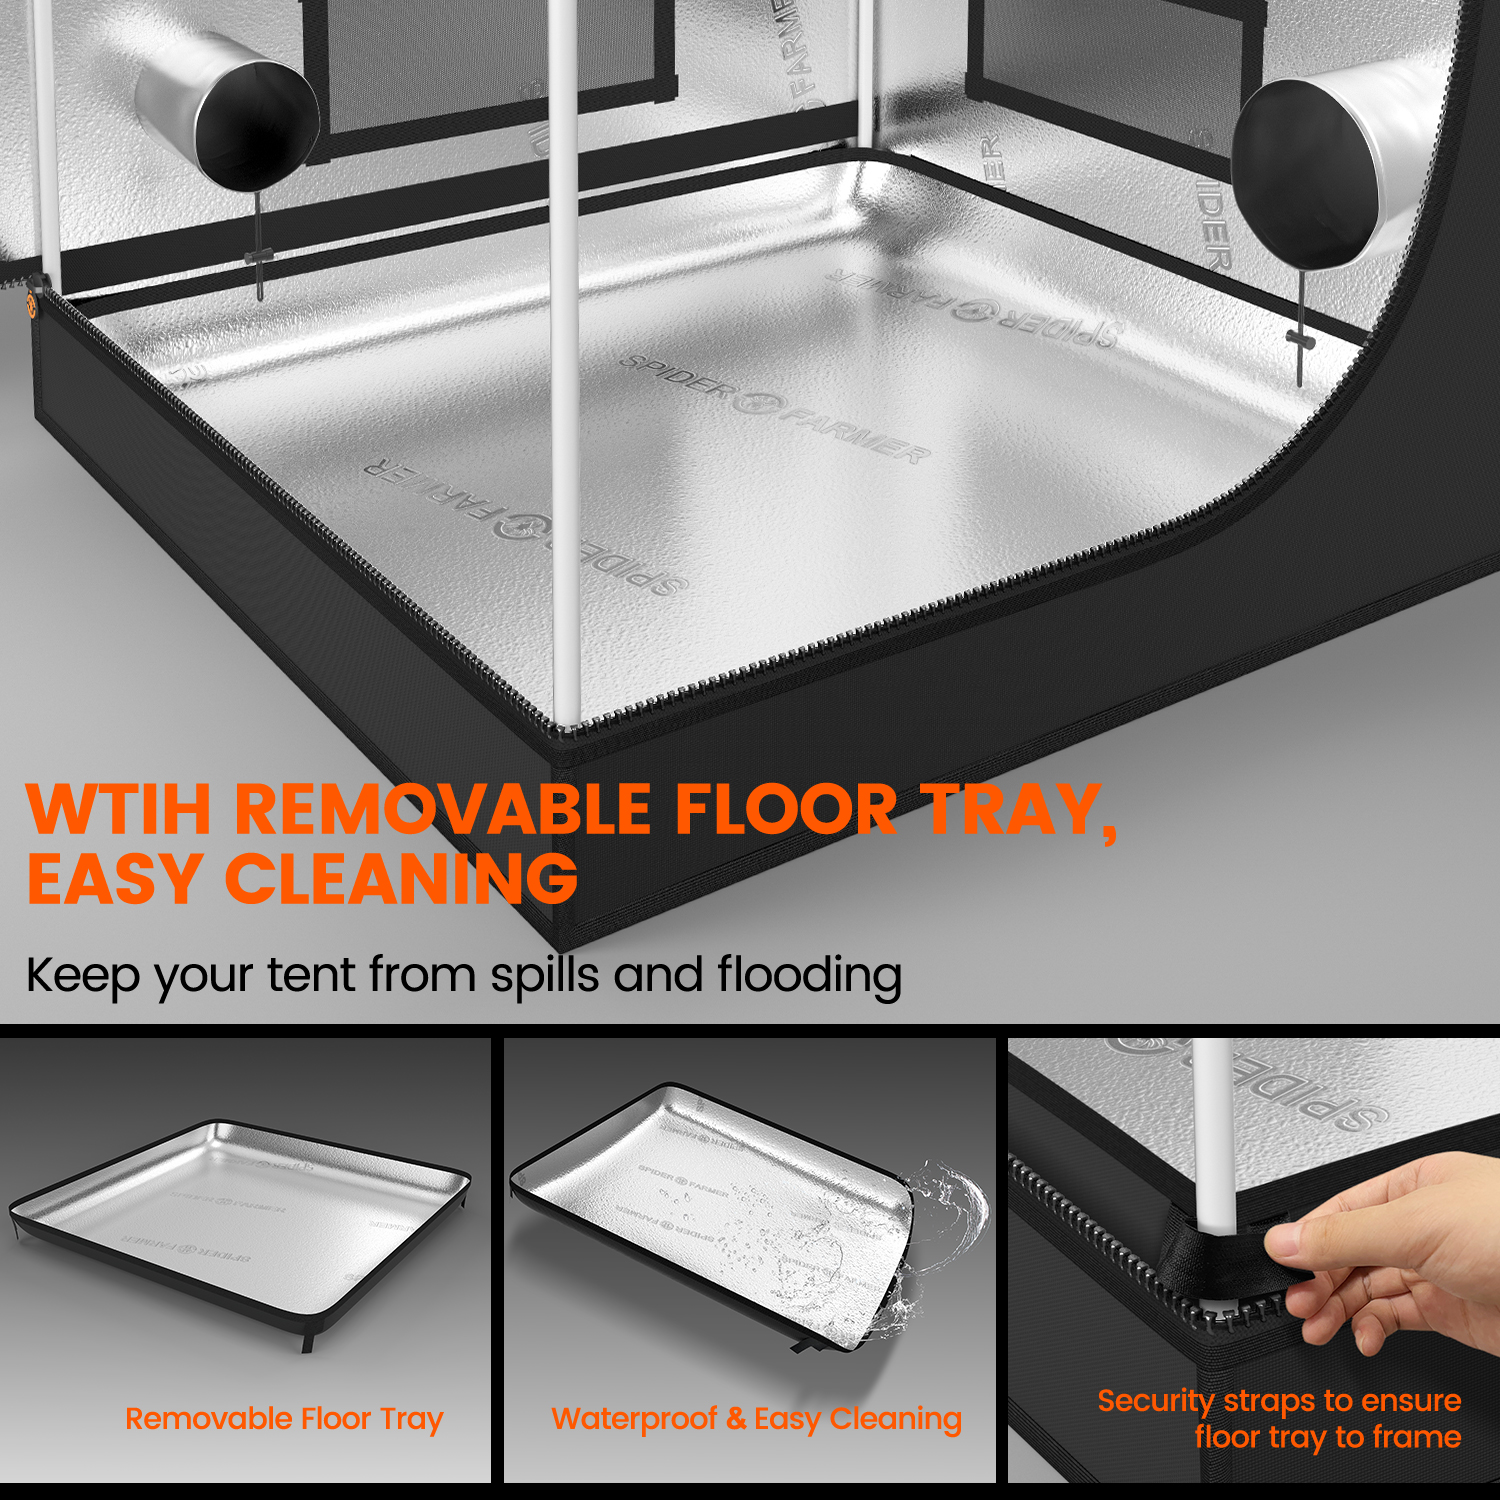 Waterproof & Removable Floor Tray